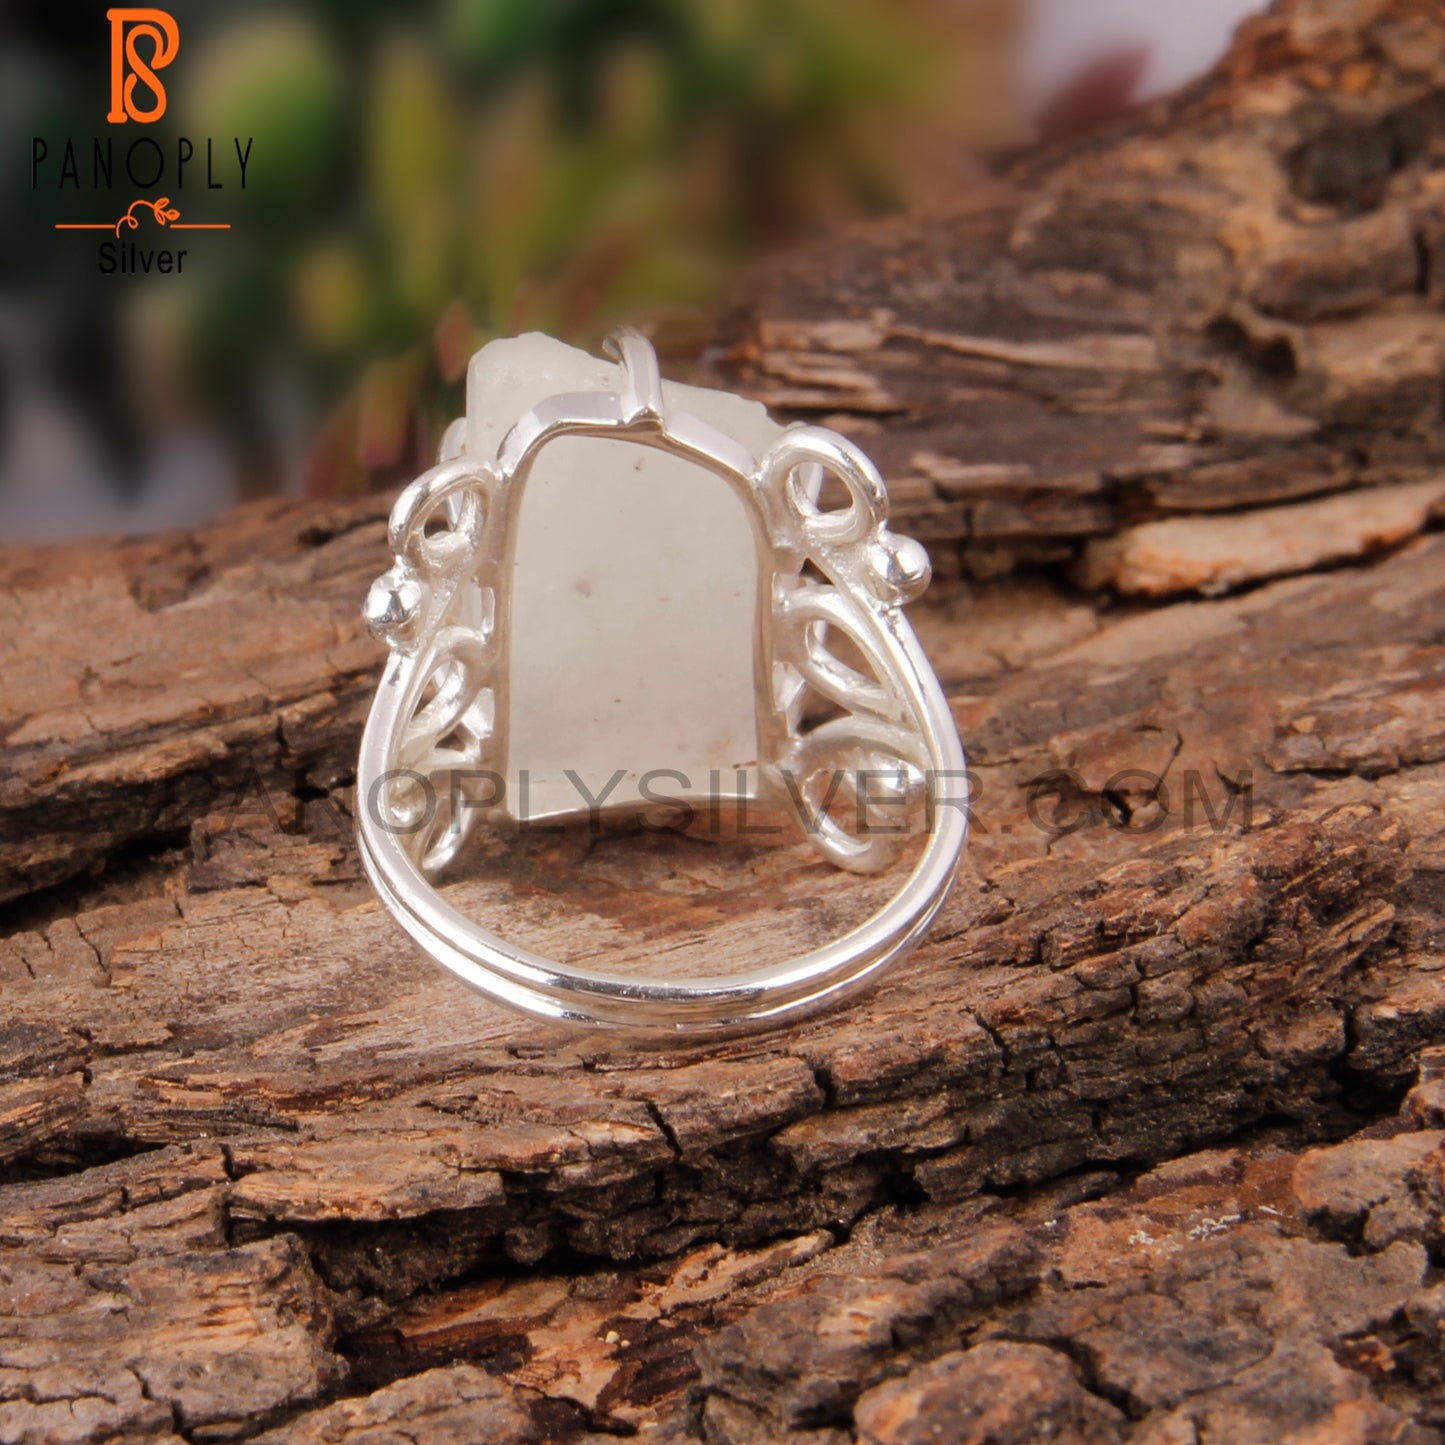 Libyan Desert Glass 925 Silver Ring Gift For Her